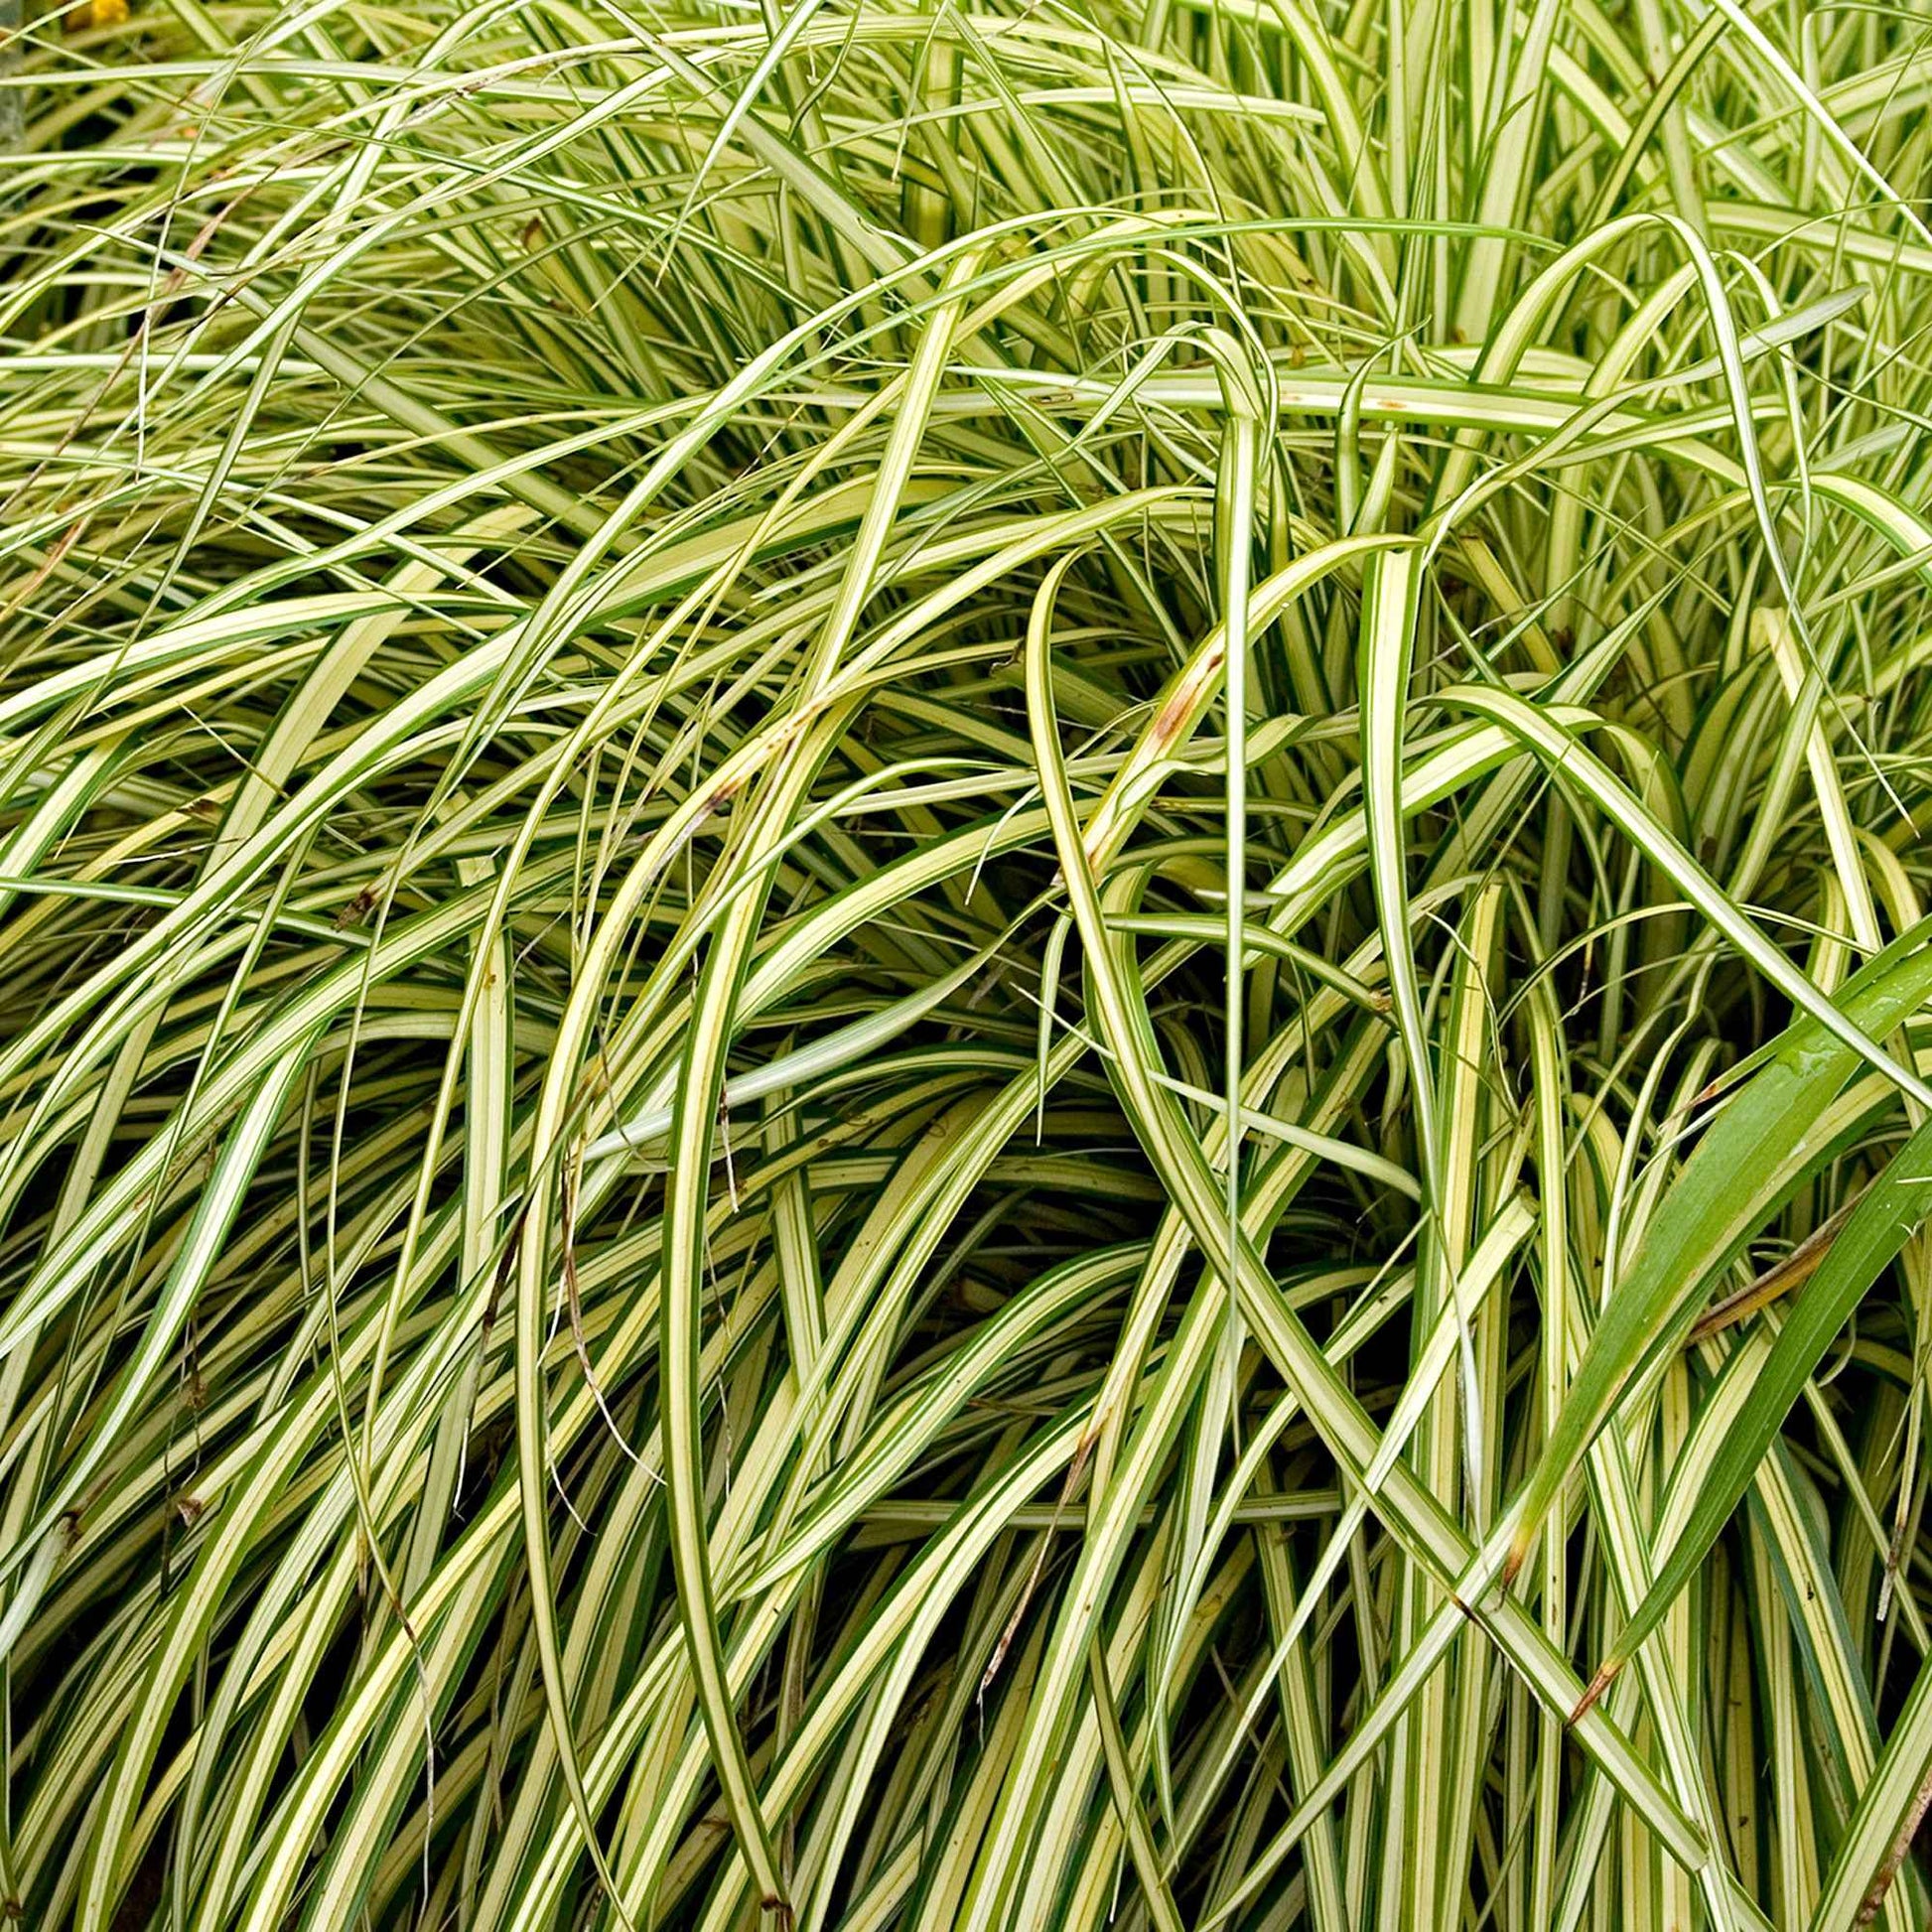 Segge 'Evergold' - Carex oshimensis evergold - Segge - Carex